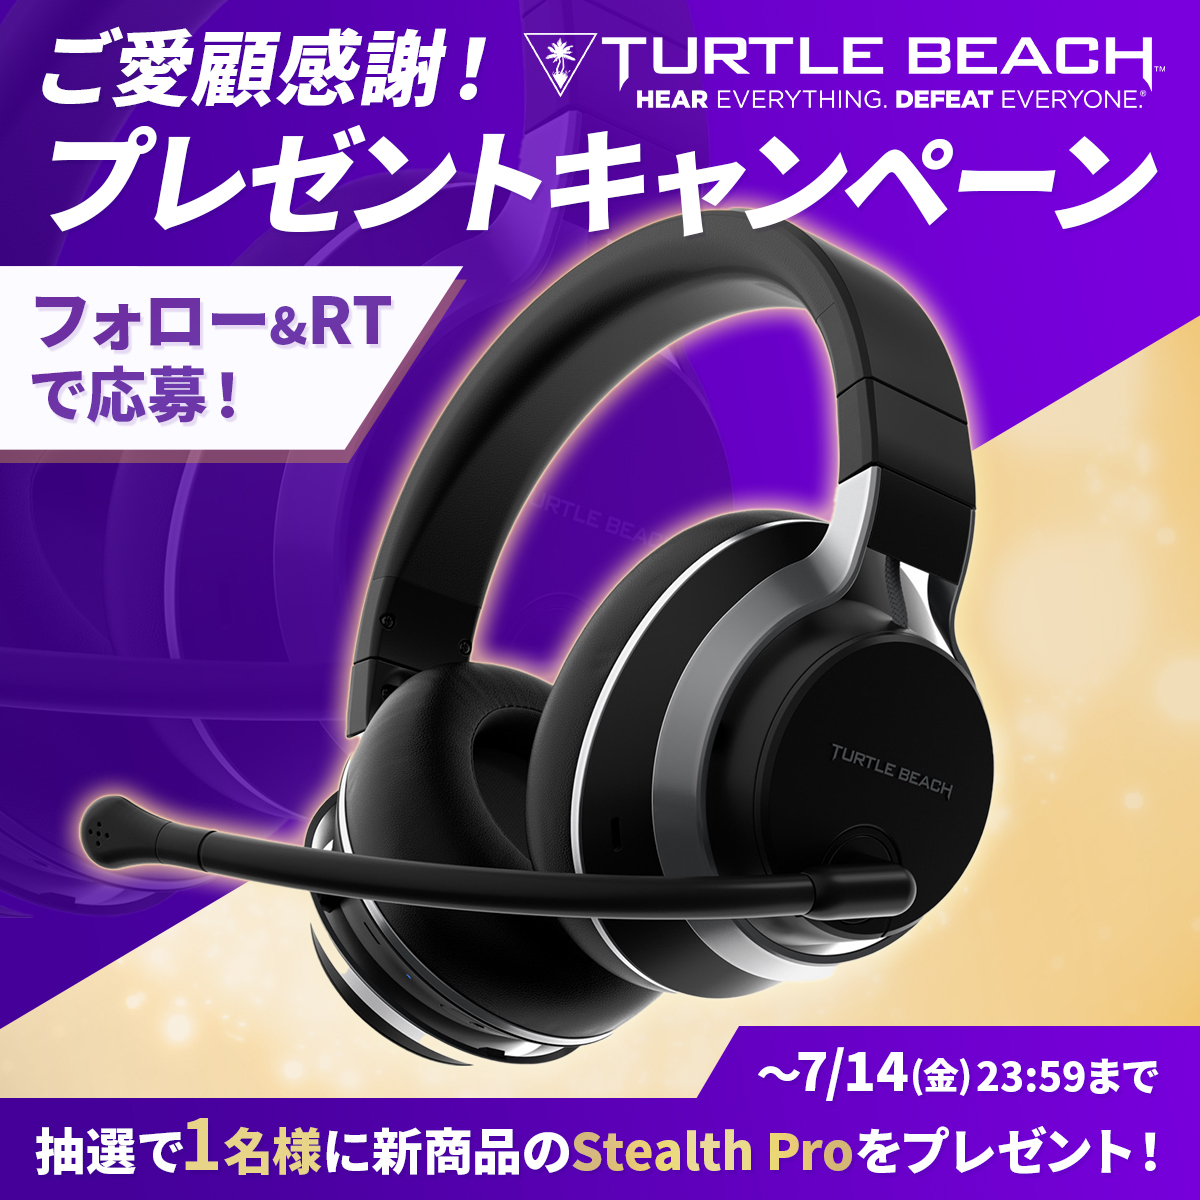 Turtle Beach Japan on X: 